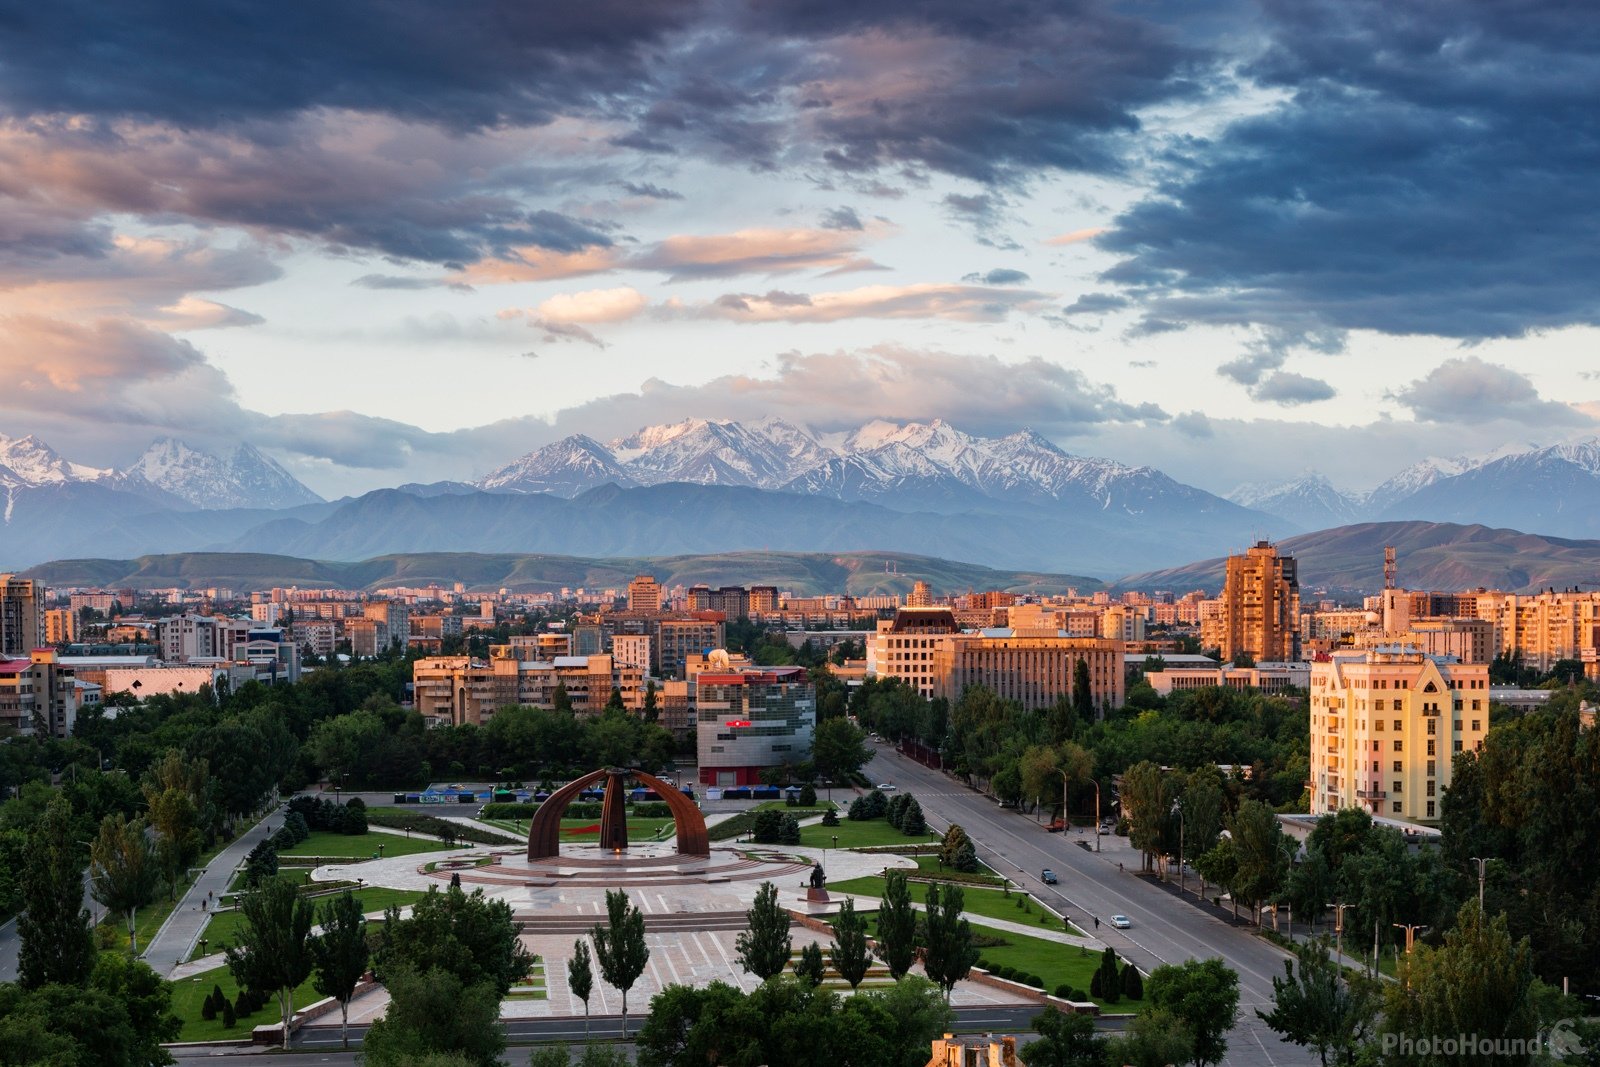 Kyrgyzstan photo locations